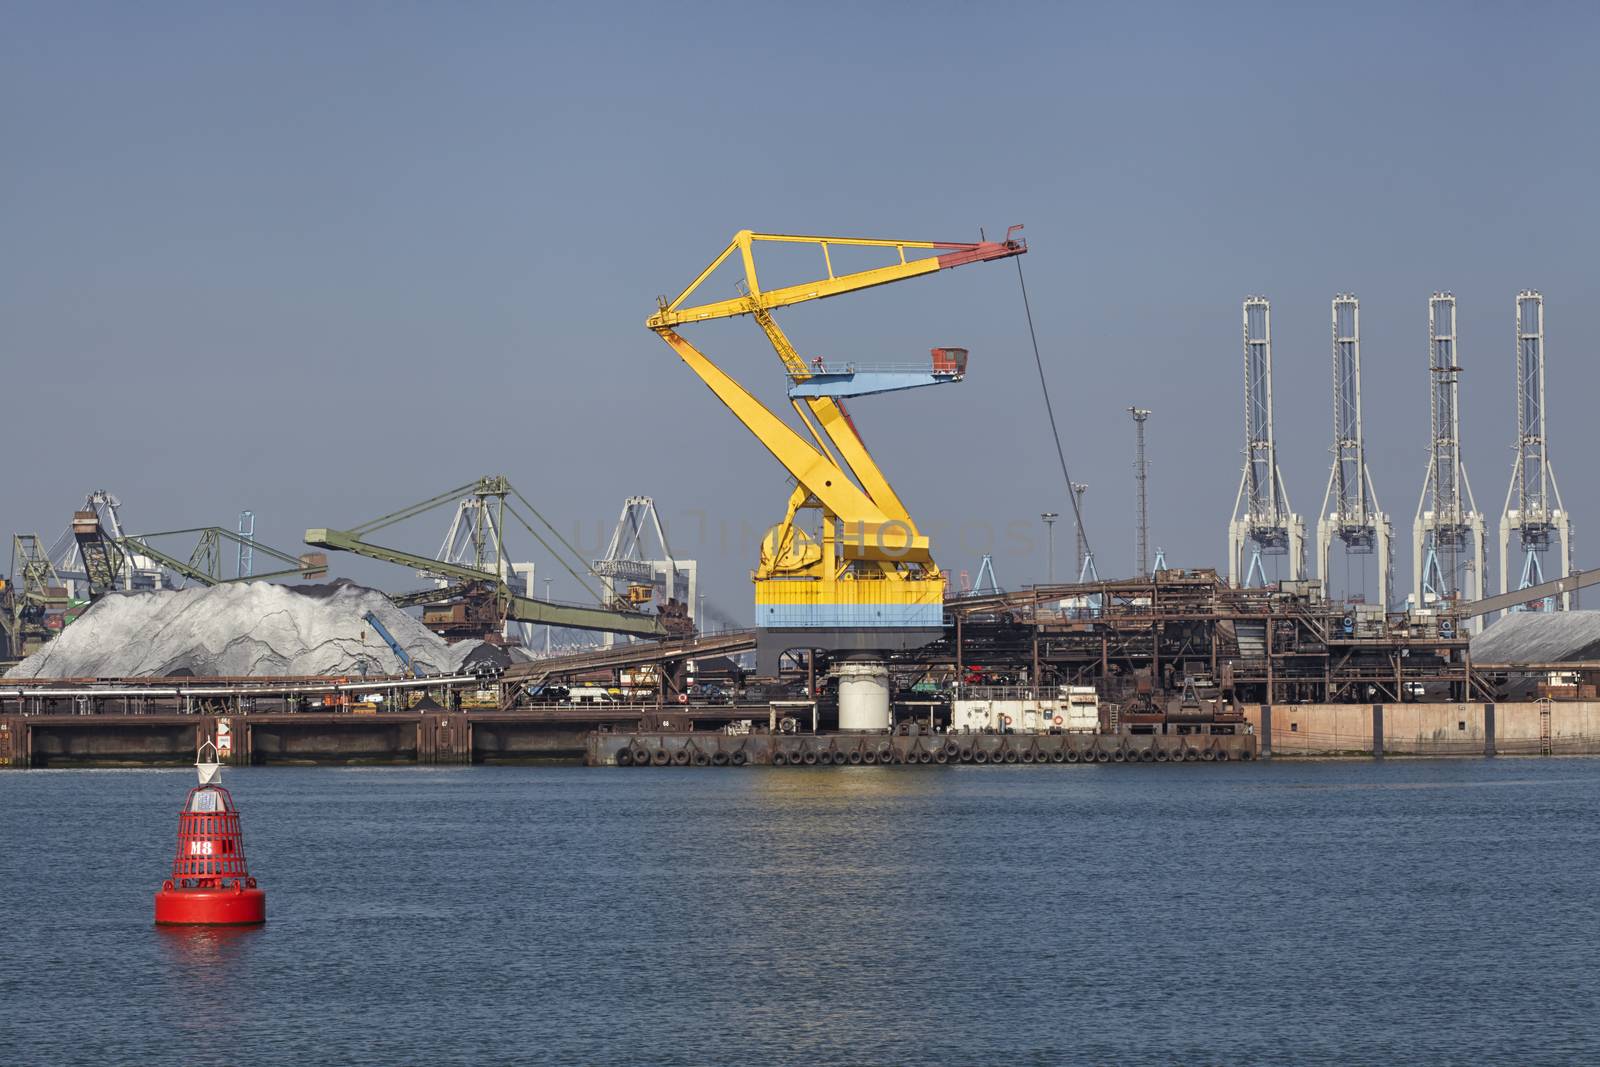 Port cargo crane and sand over blue sky background. Port of Rotterdam.
